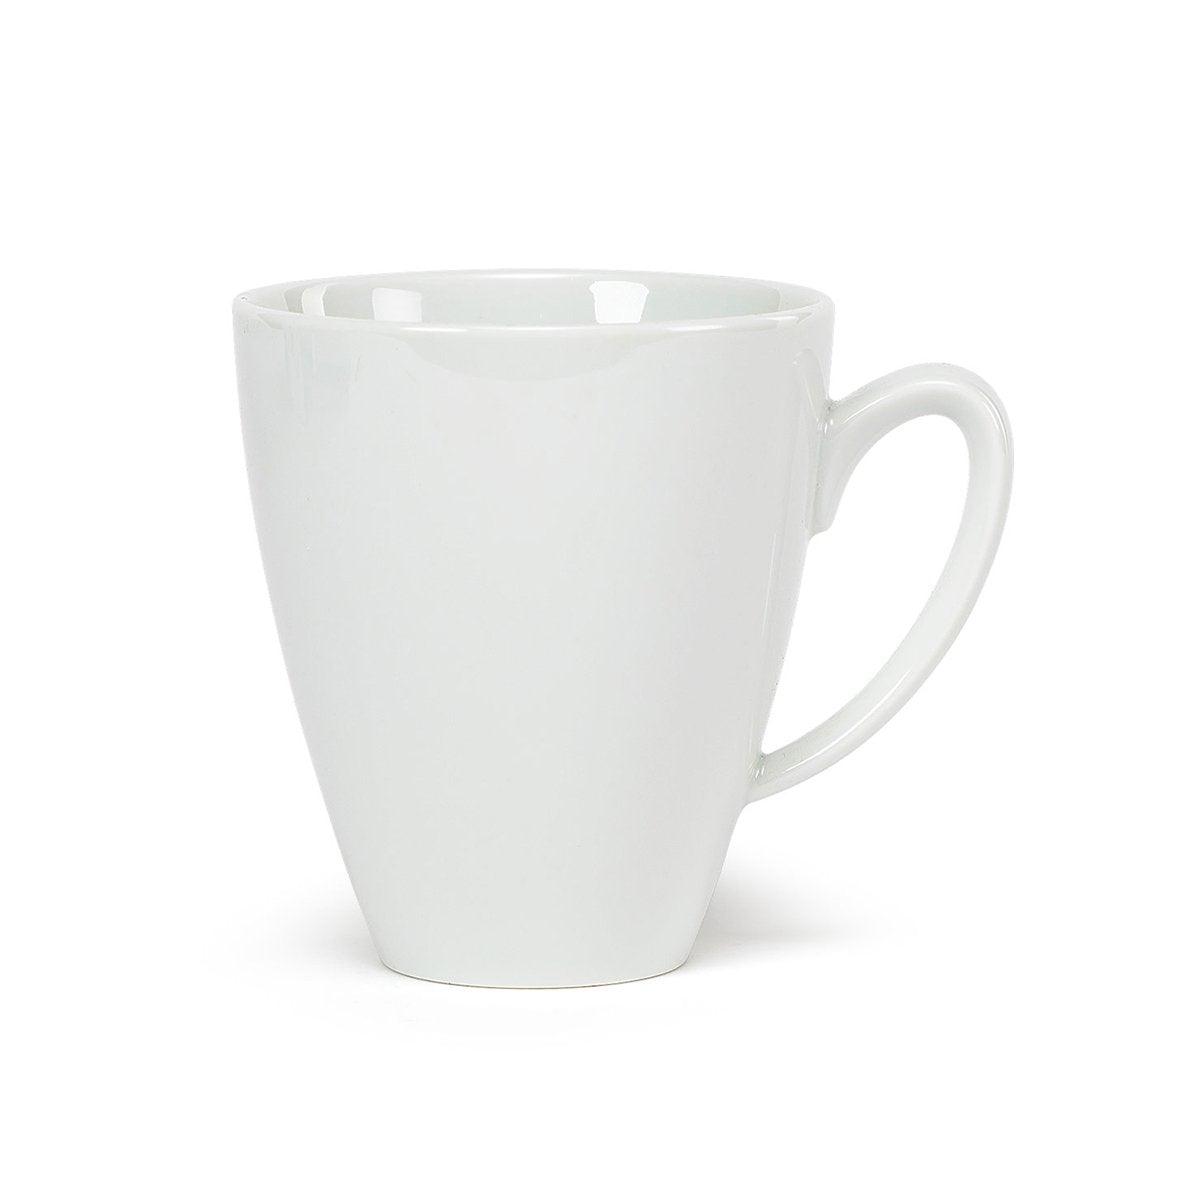 Rosenthal Weiss White Mug With Handle - Home4u